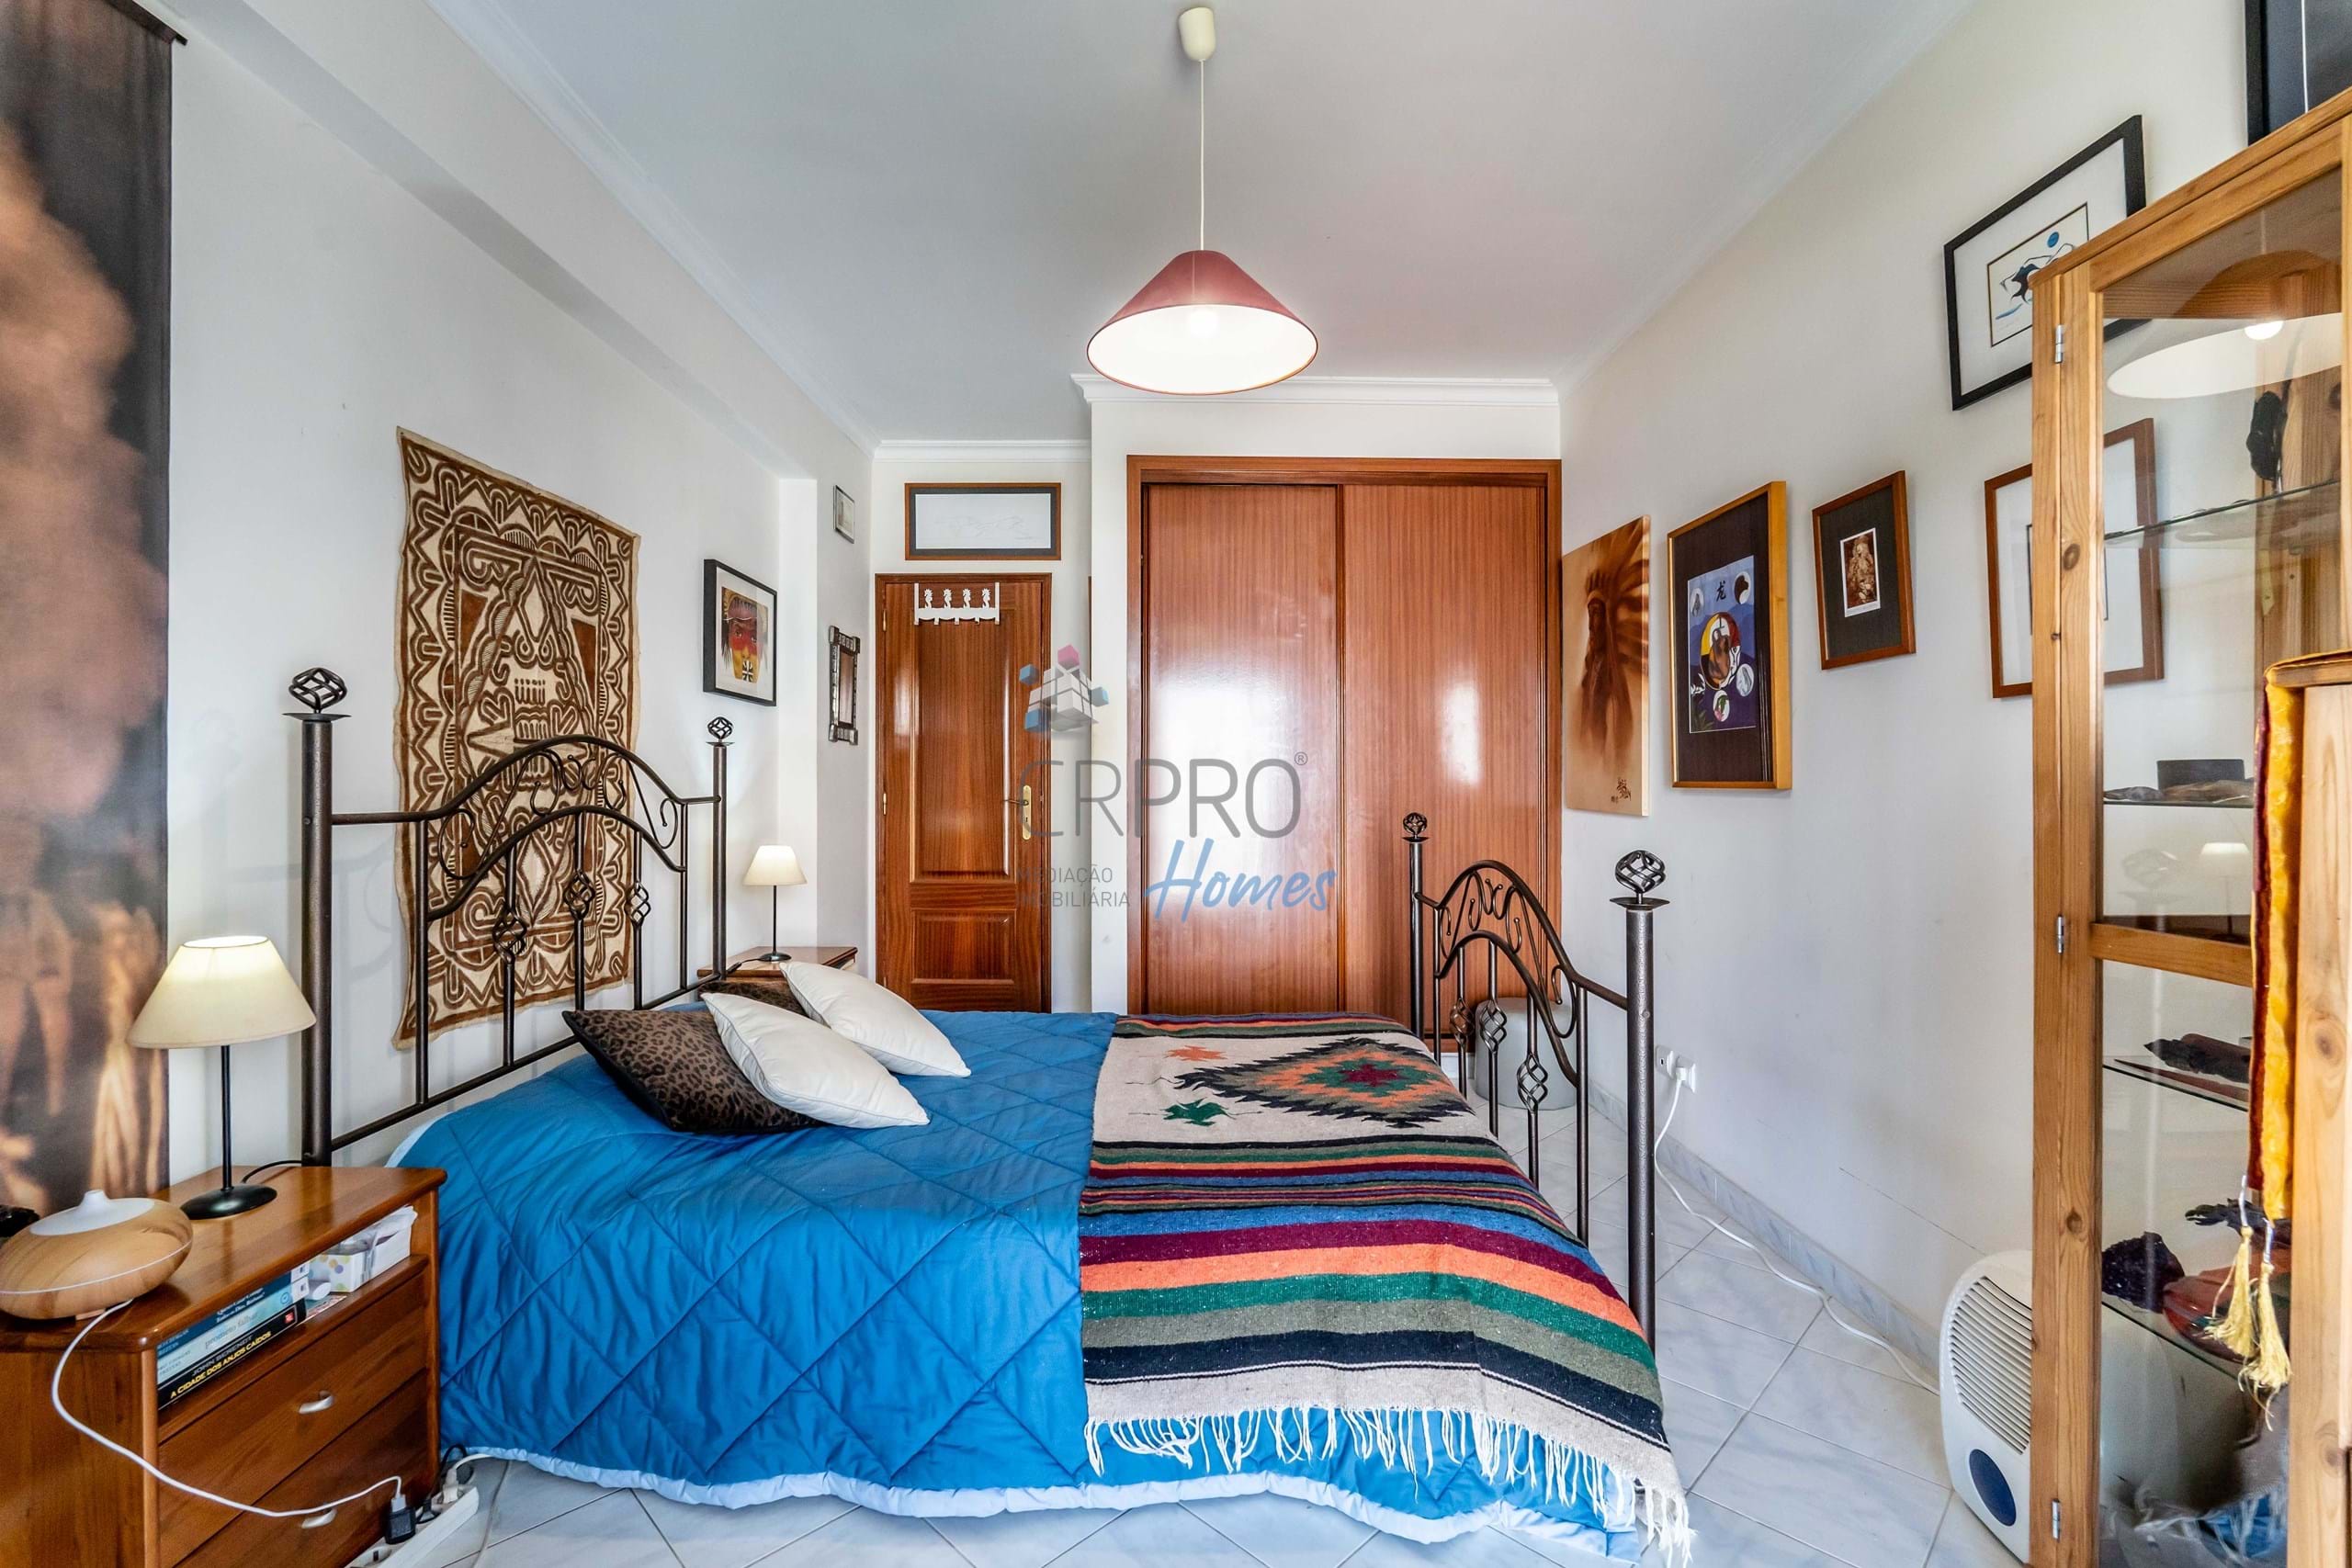 3 bedroom apartment in Armação de Pêra, with parking space and storage room